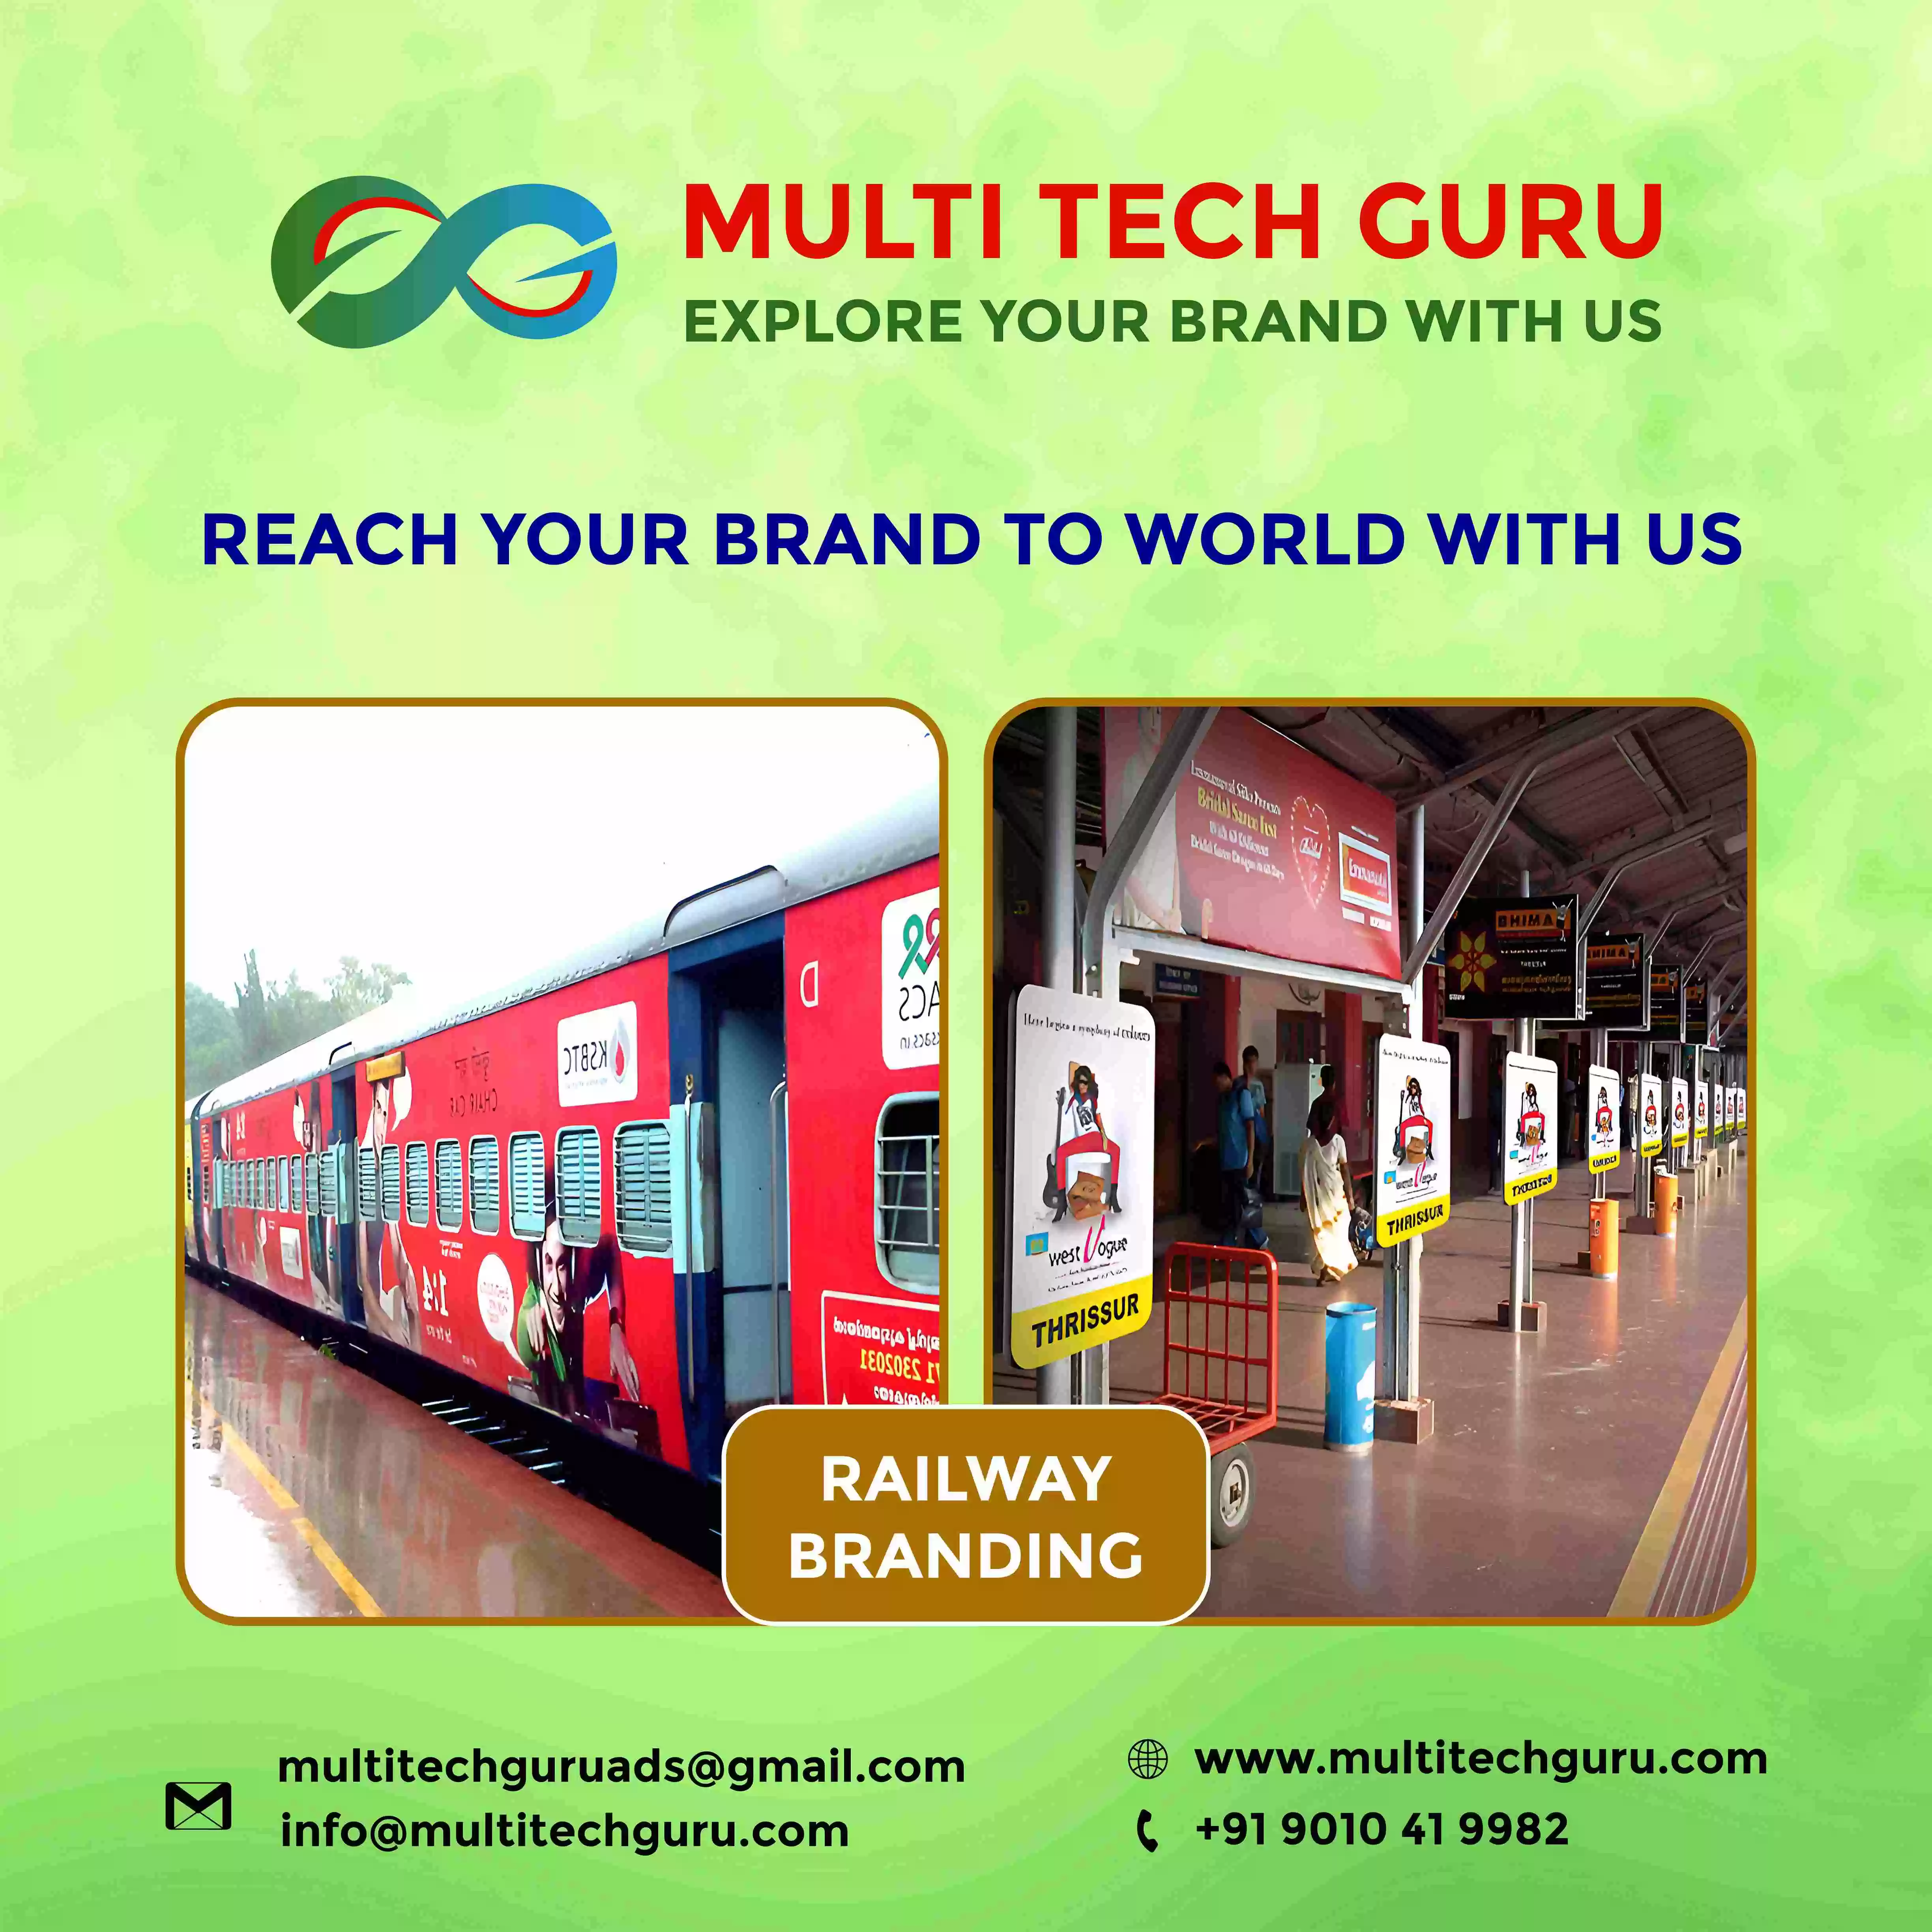 Railway-Branding-advertising-marketing-Multitechguru.com-9010419982-Outdoor-media-advertising-Print-Media-Services.jpg